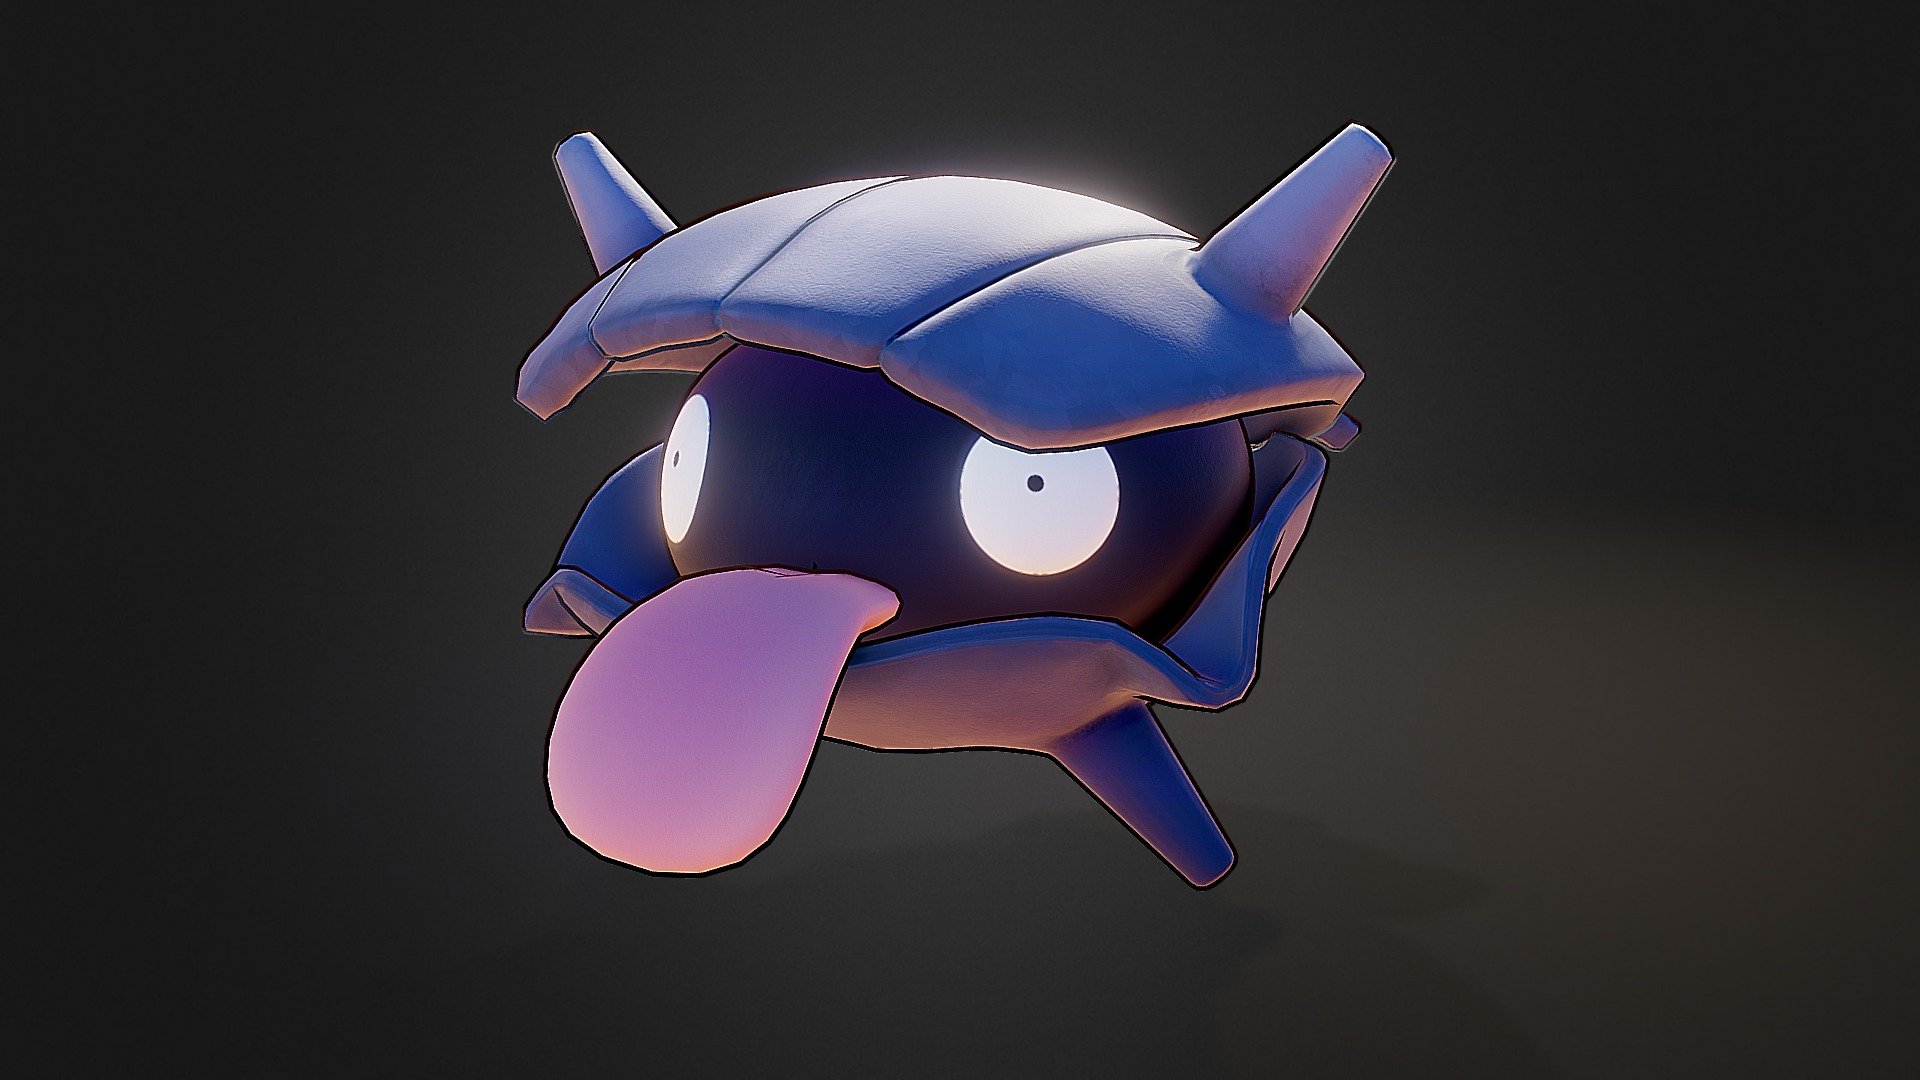 Purple one - Shellder Pokemon - 3D model by 3dlogicus 3d model